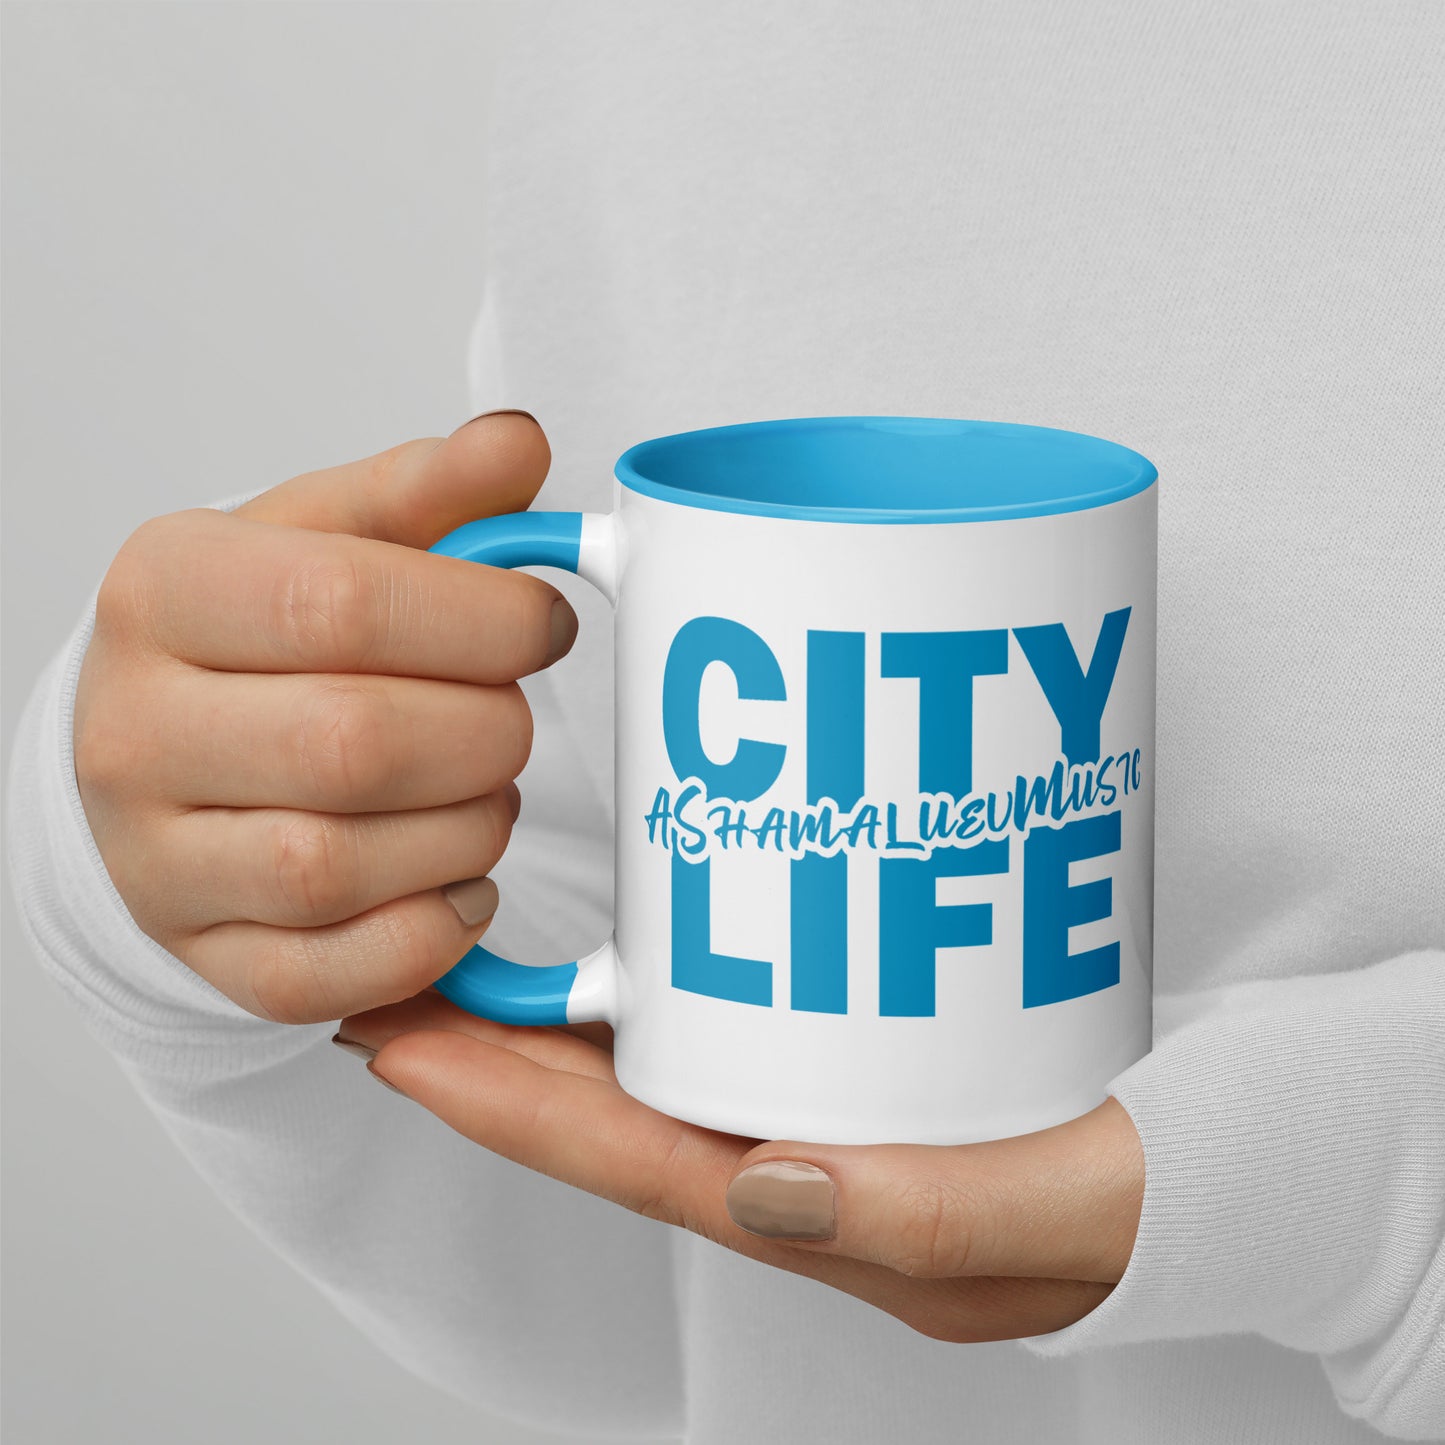 Colored Mug "City Life"